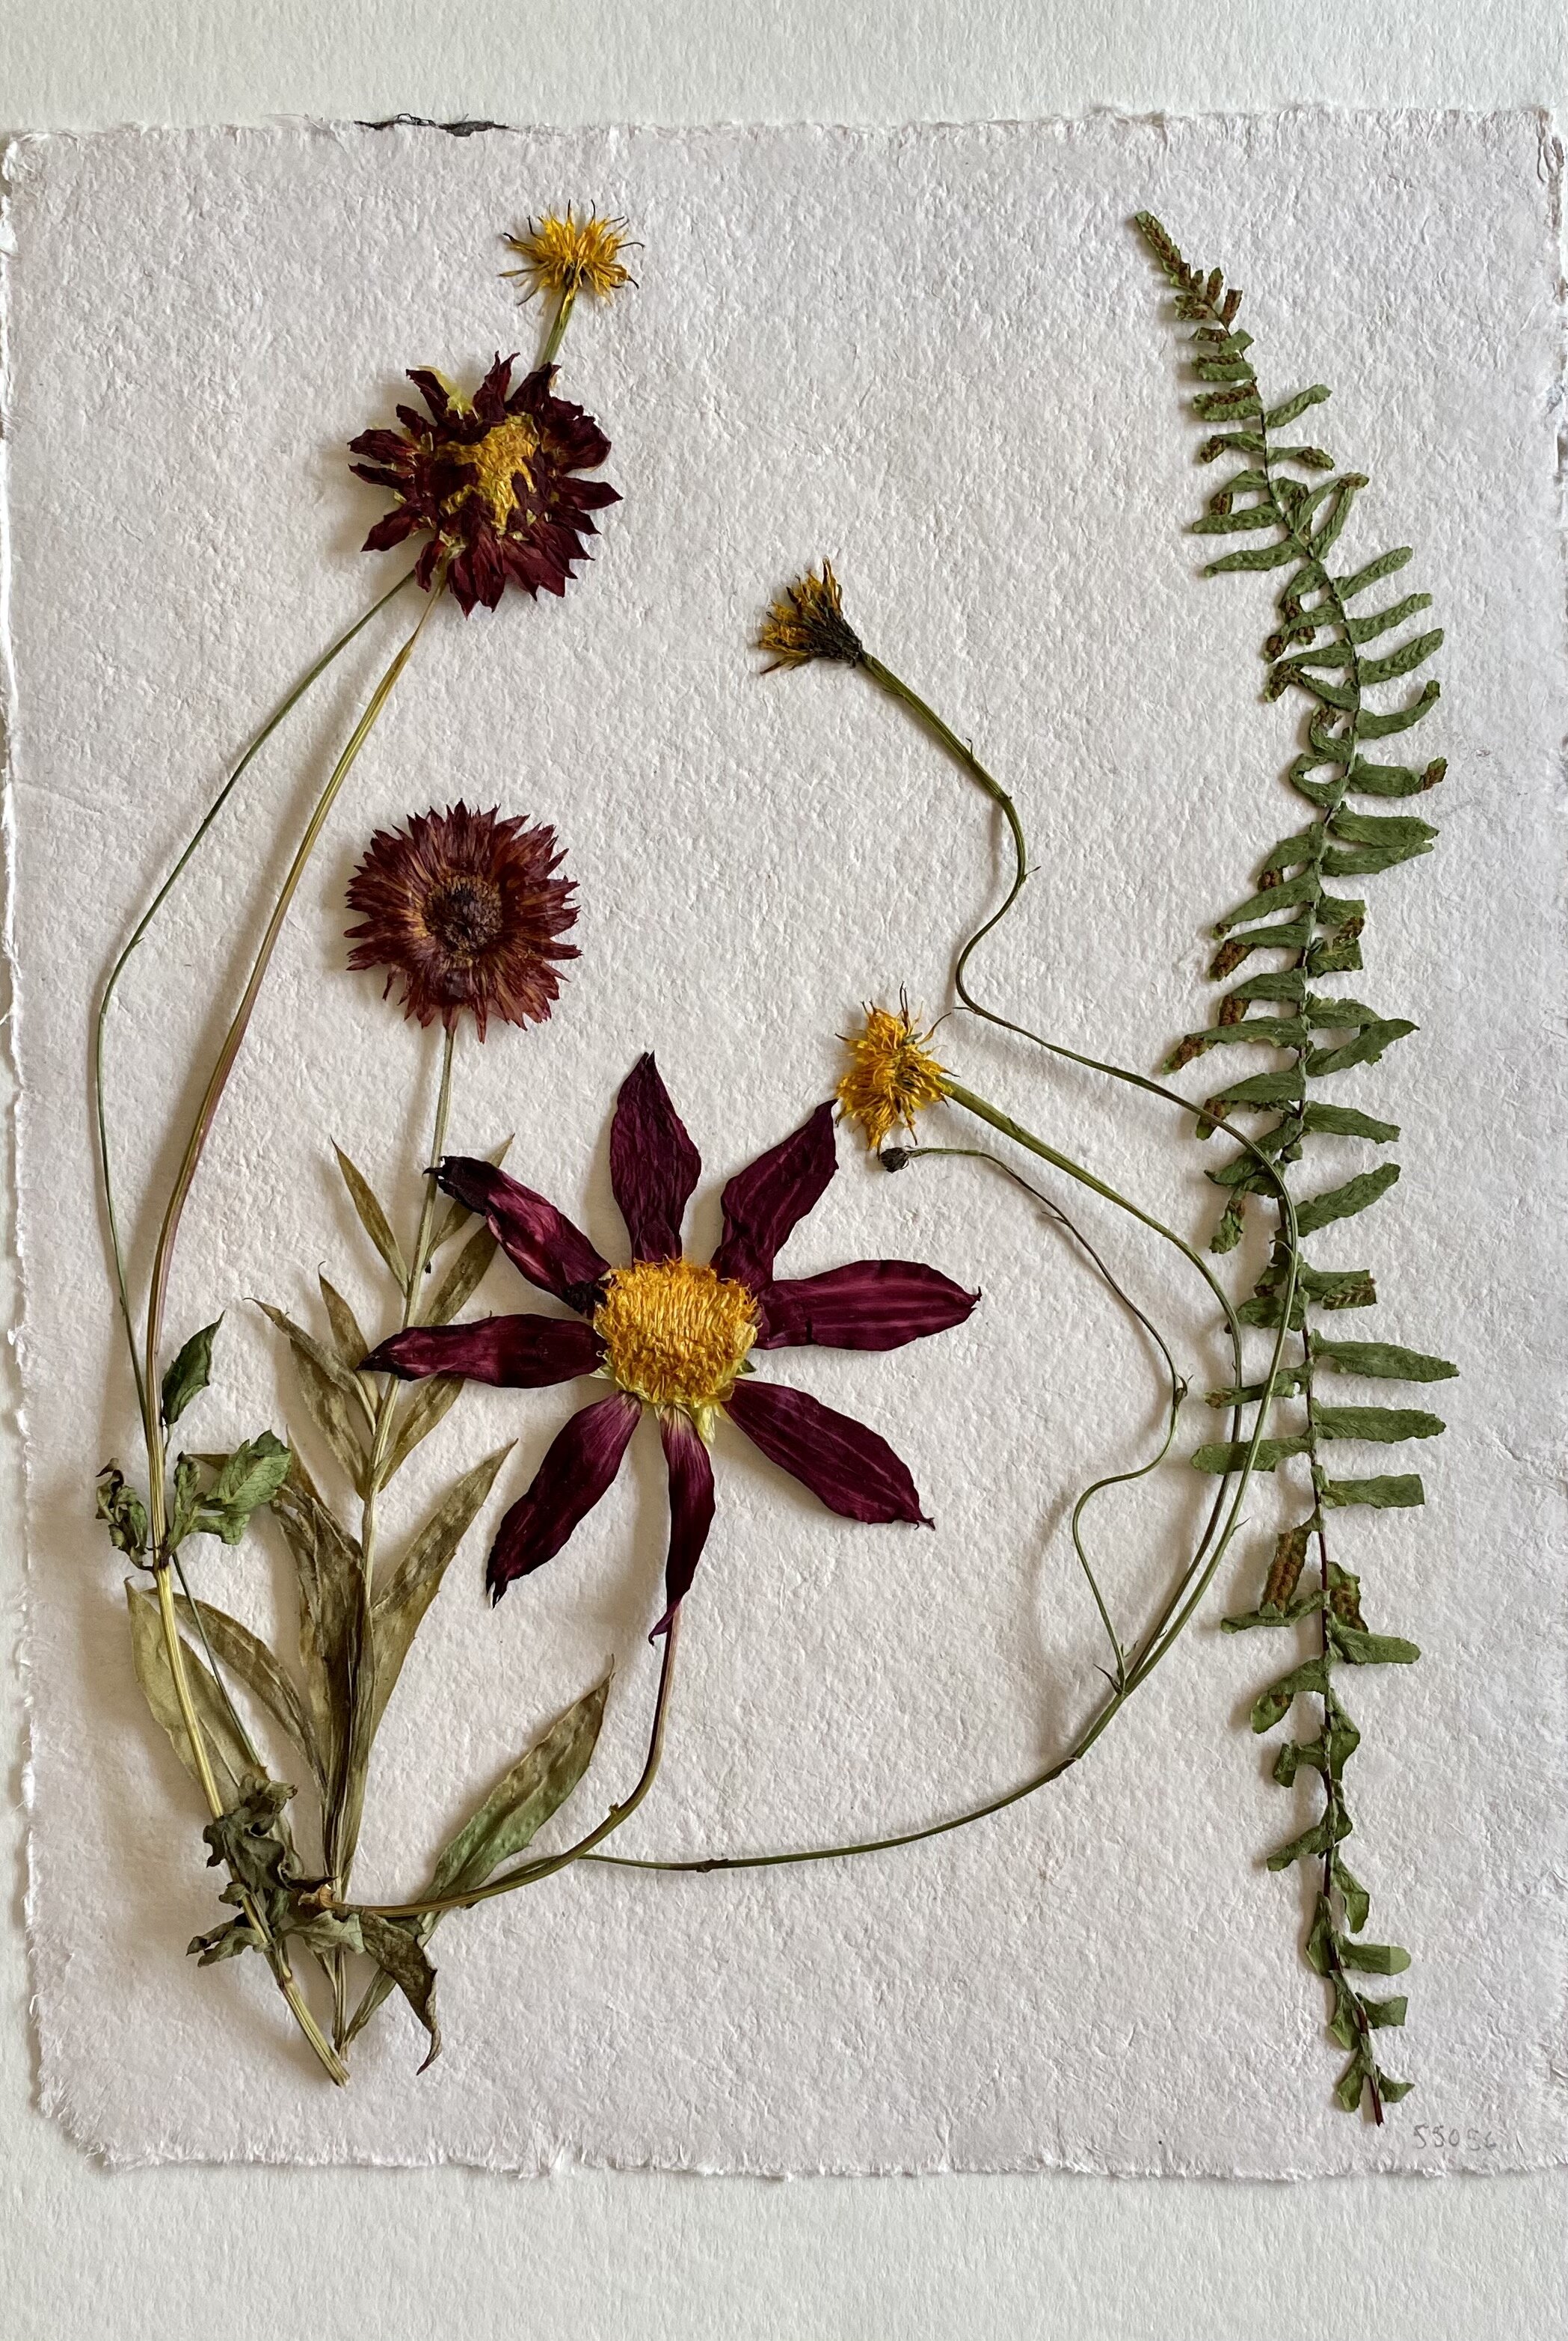 Methods of Flower Preservation (Feb 20th) — Sarah K. Faucette